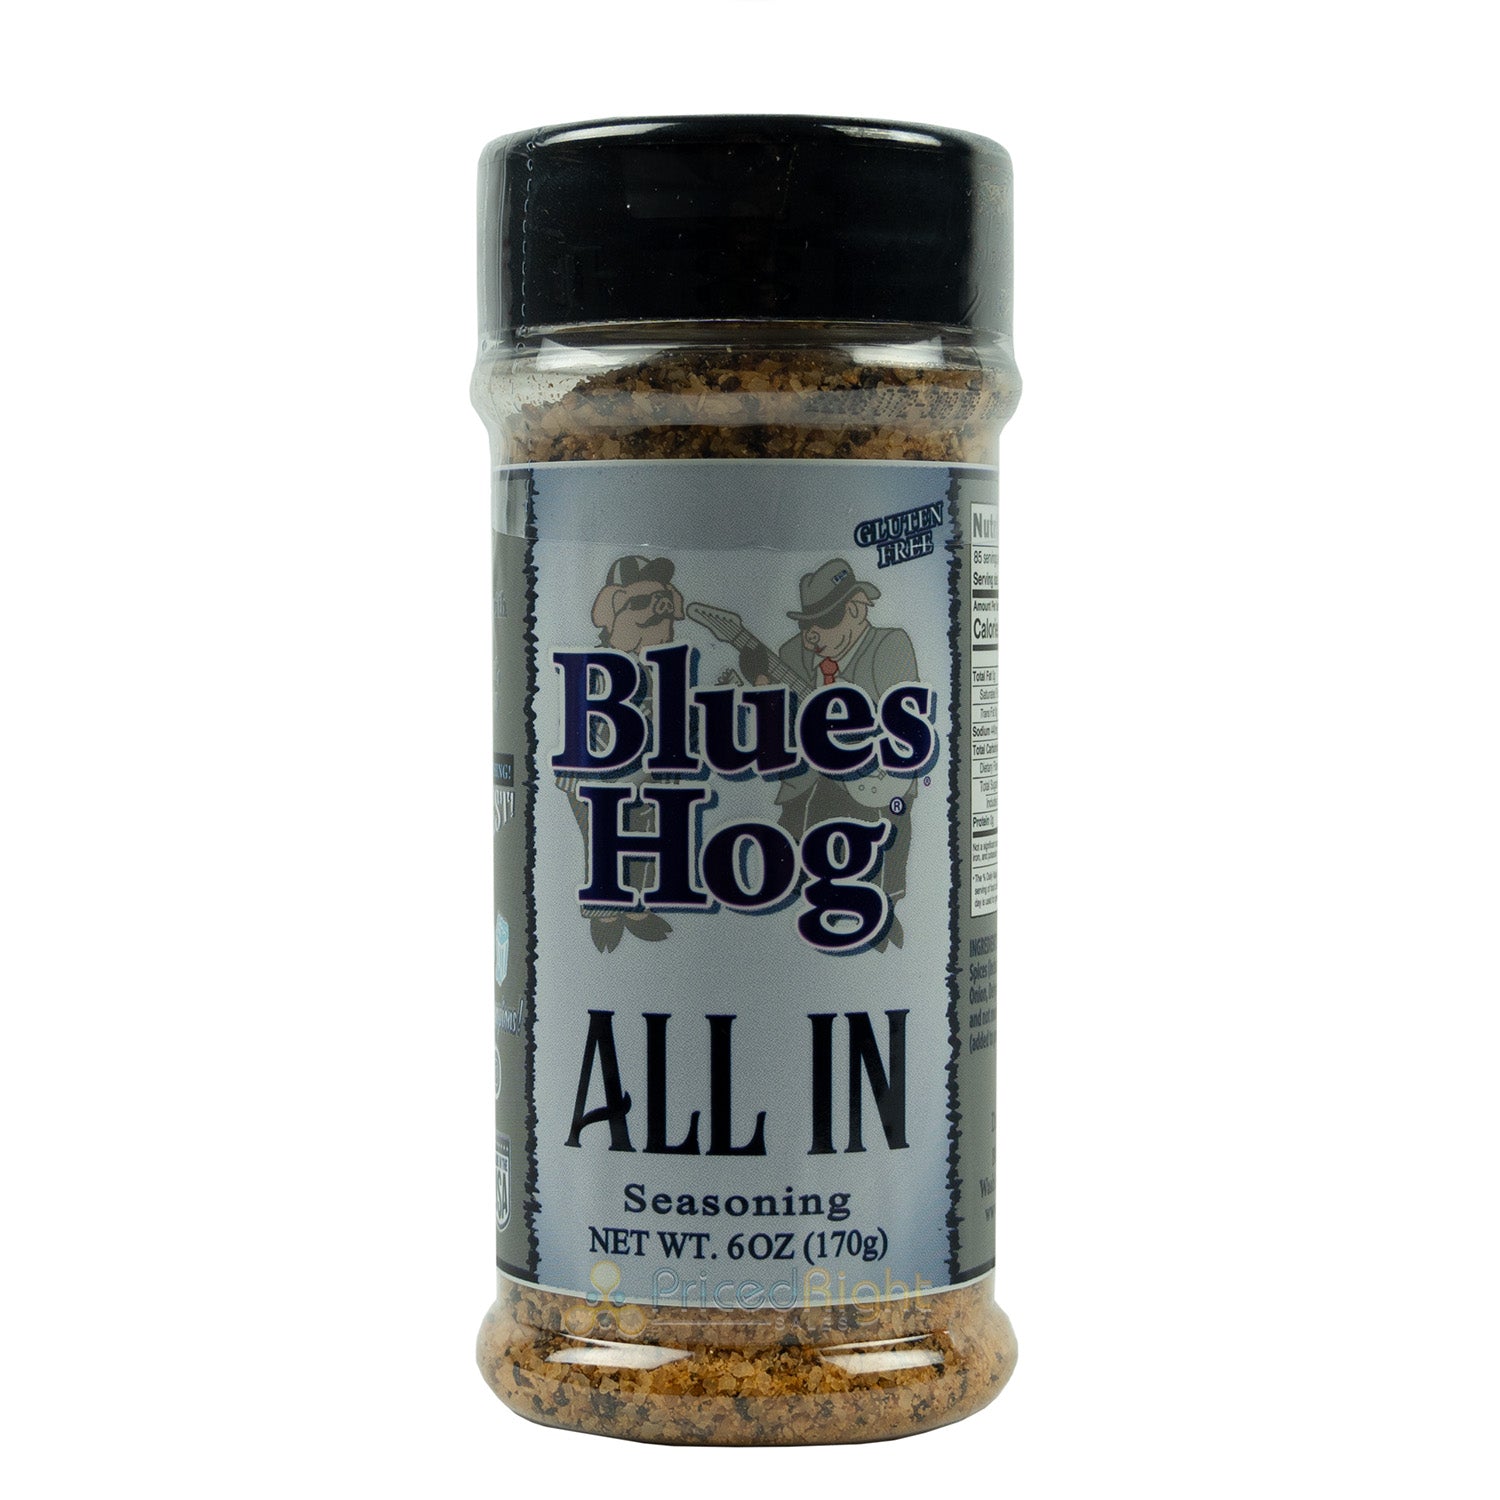 Blues Hog All In Dry Rub All Natural High Quality Seasoning Gluten Free 6.0 oz